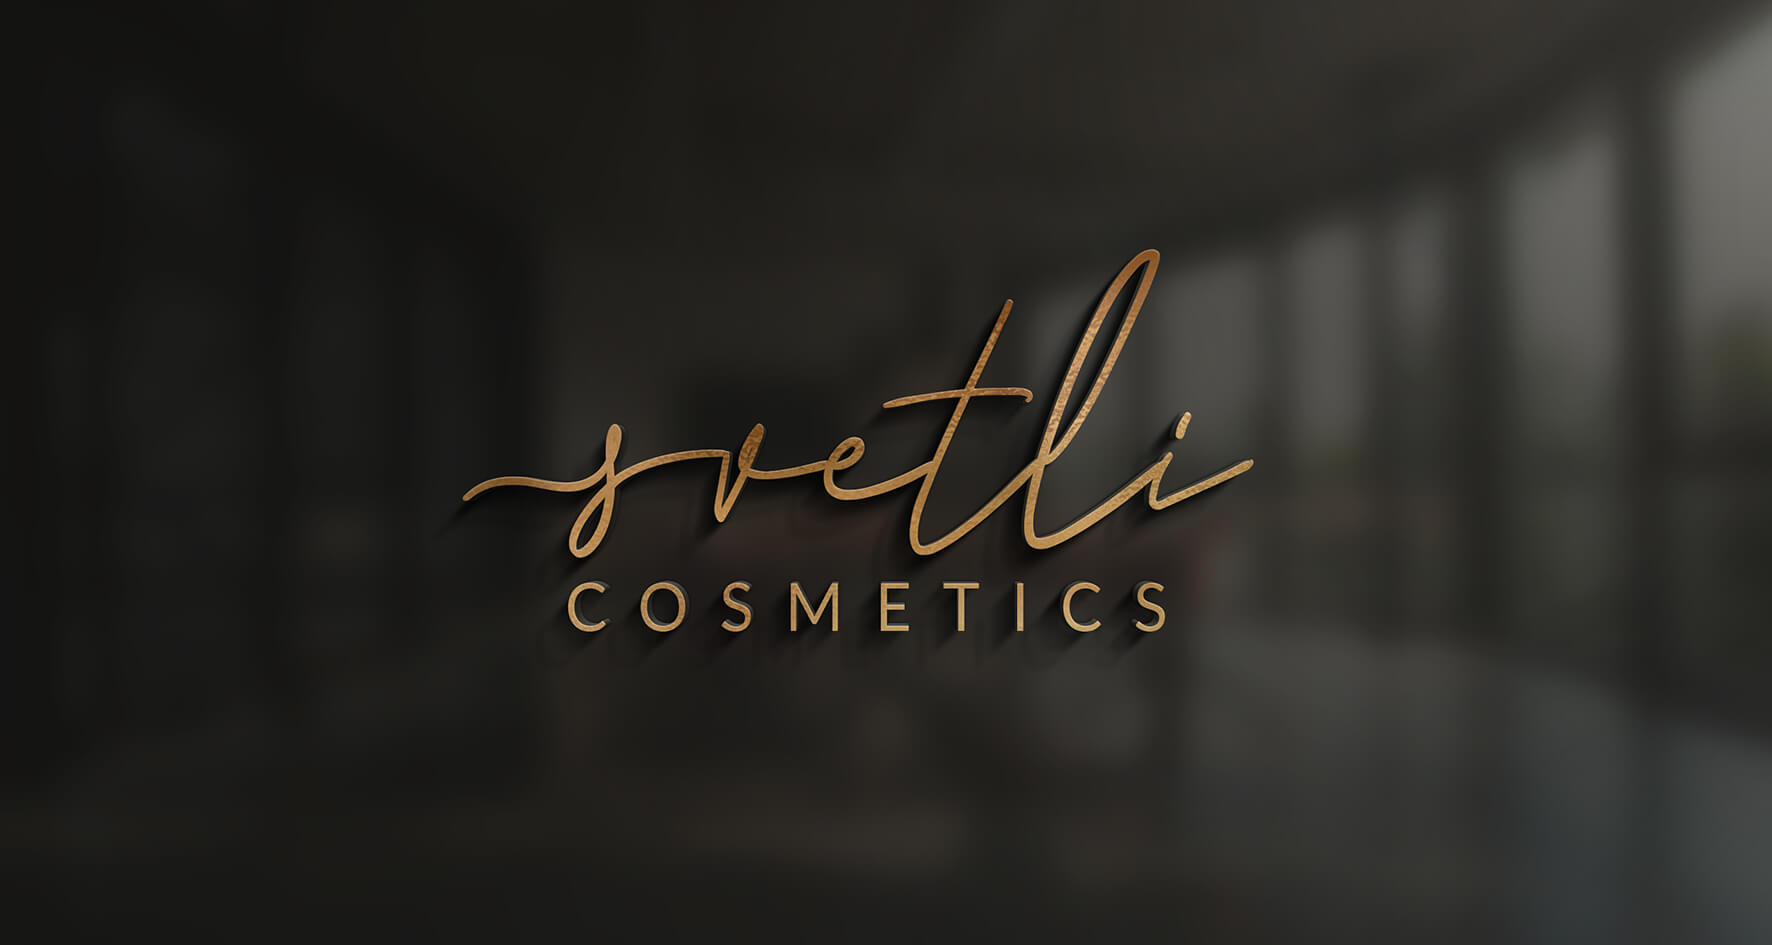 Svetli_Cosmetics_Logo_by slivagency